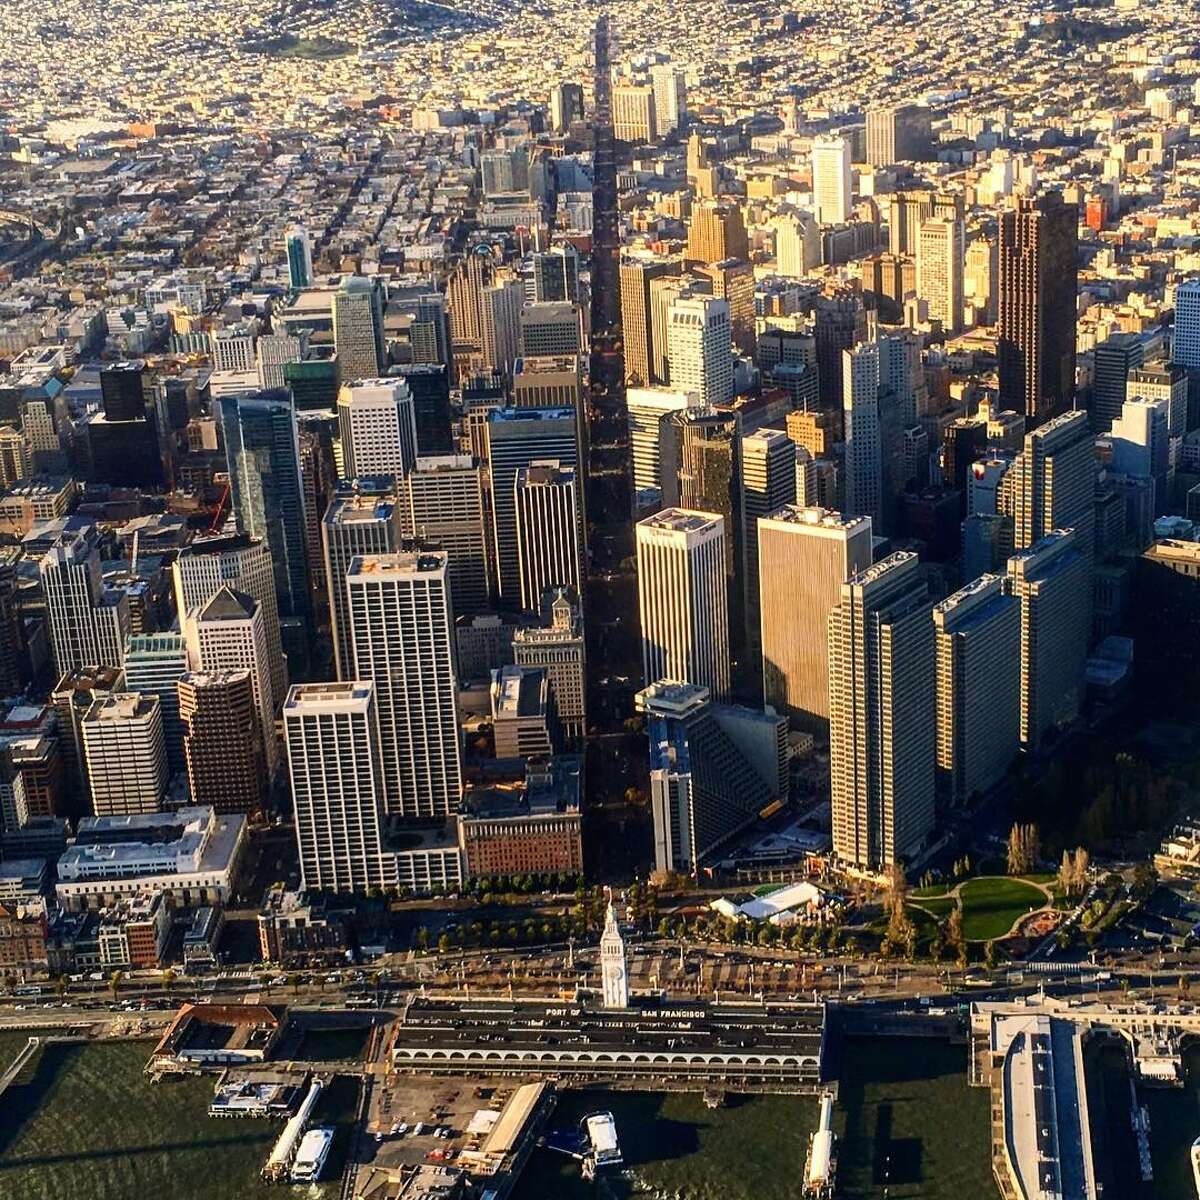 San Francisco aerial photos through the decades: How much has the city